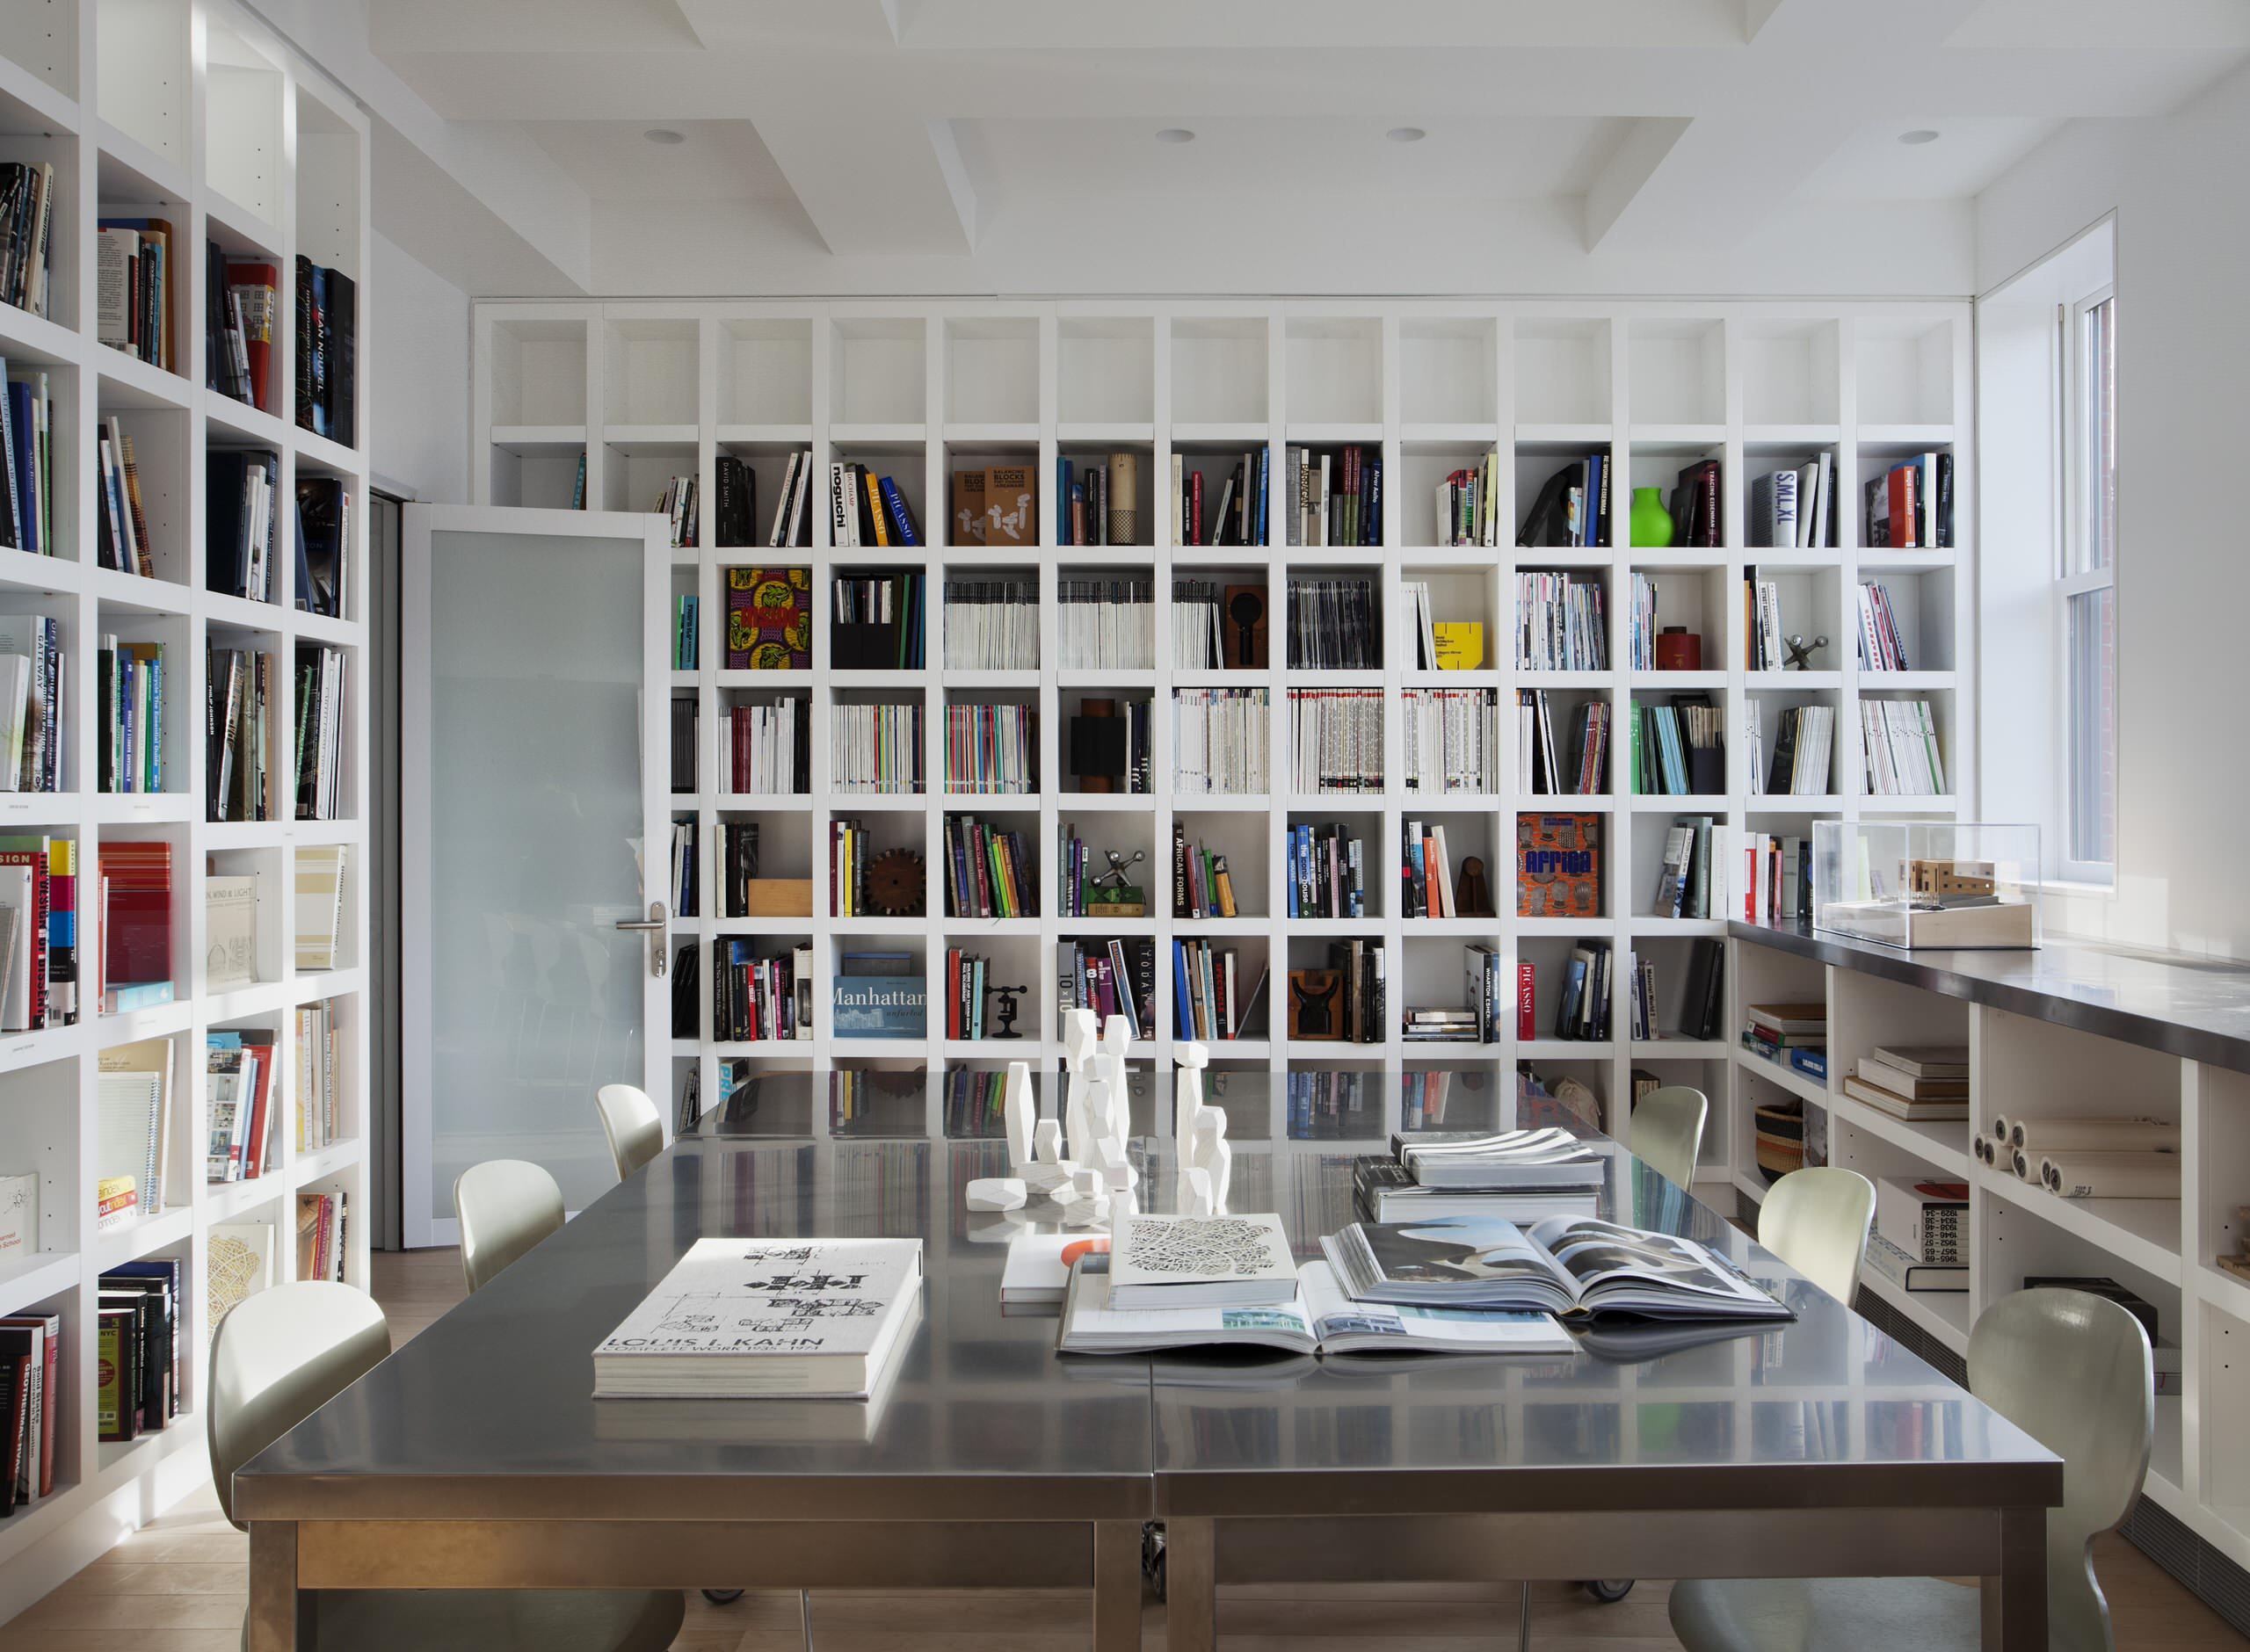 Study Room With Bookshelves - Photos & Ideas | Houzz